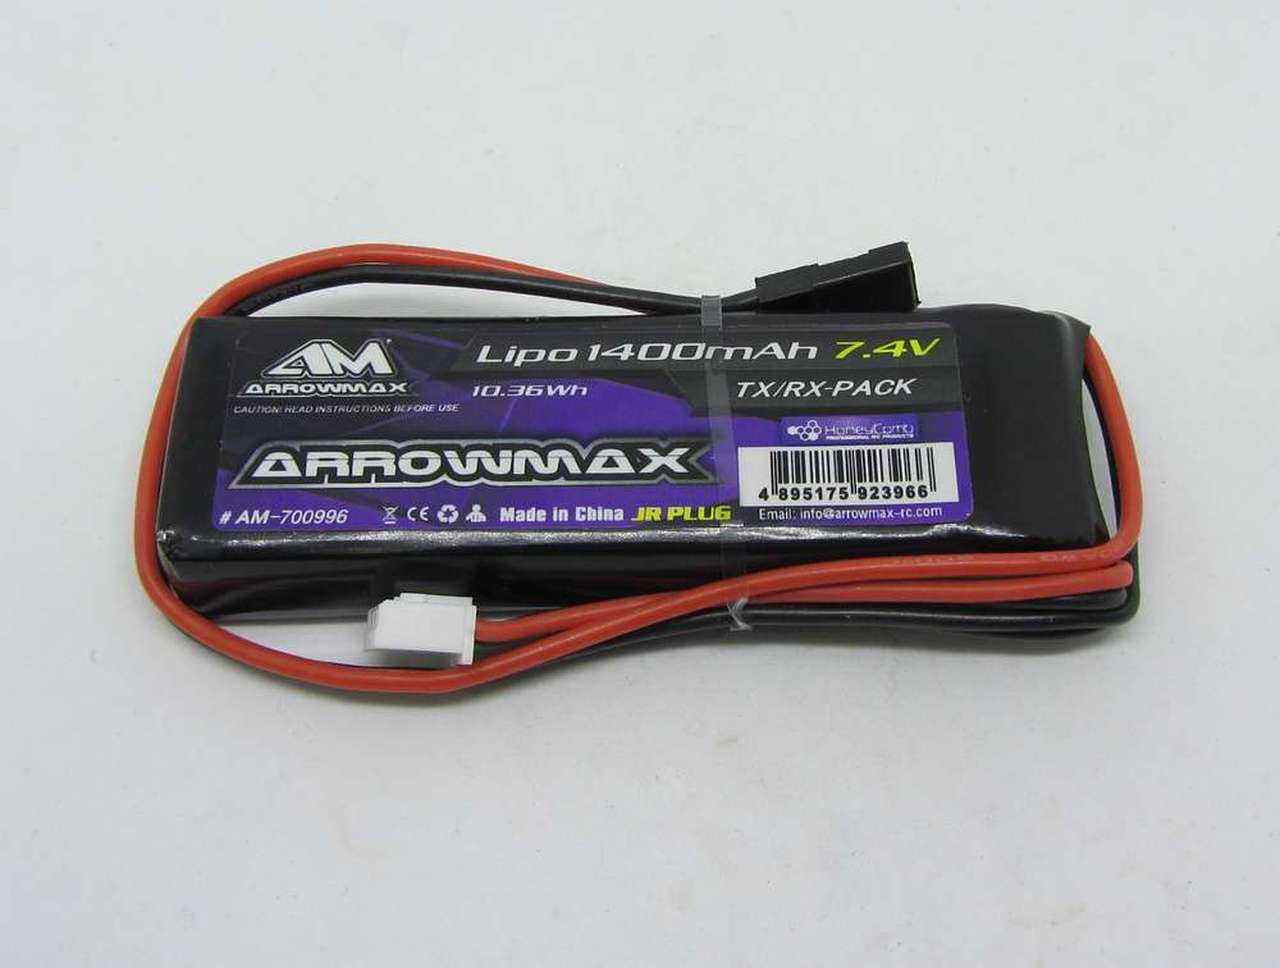 ARROWMAX LiPo 1400mah 7.4v receiver pack GP JR PLUG am700996 - RACERC